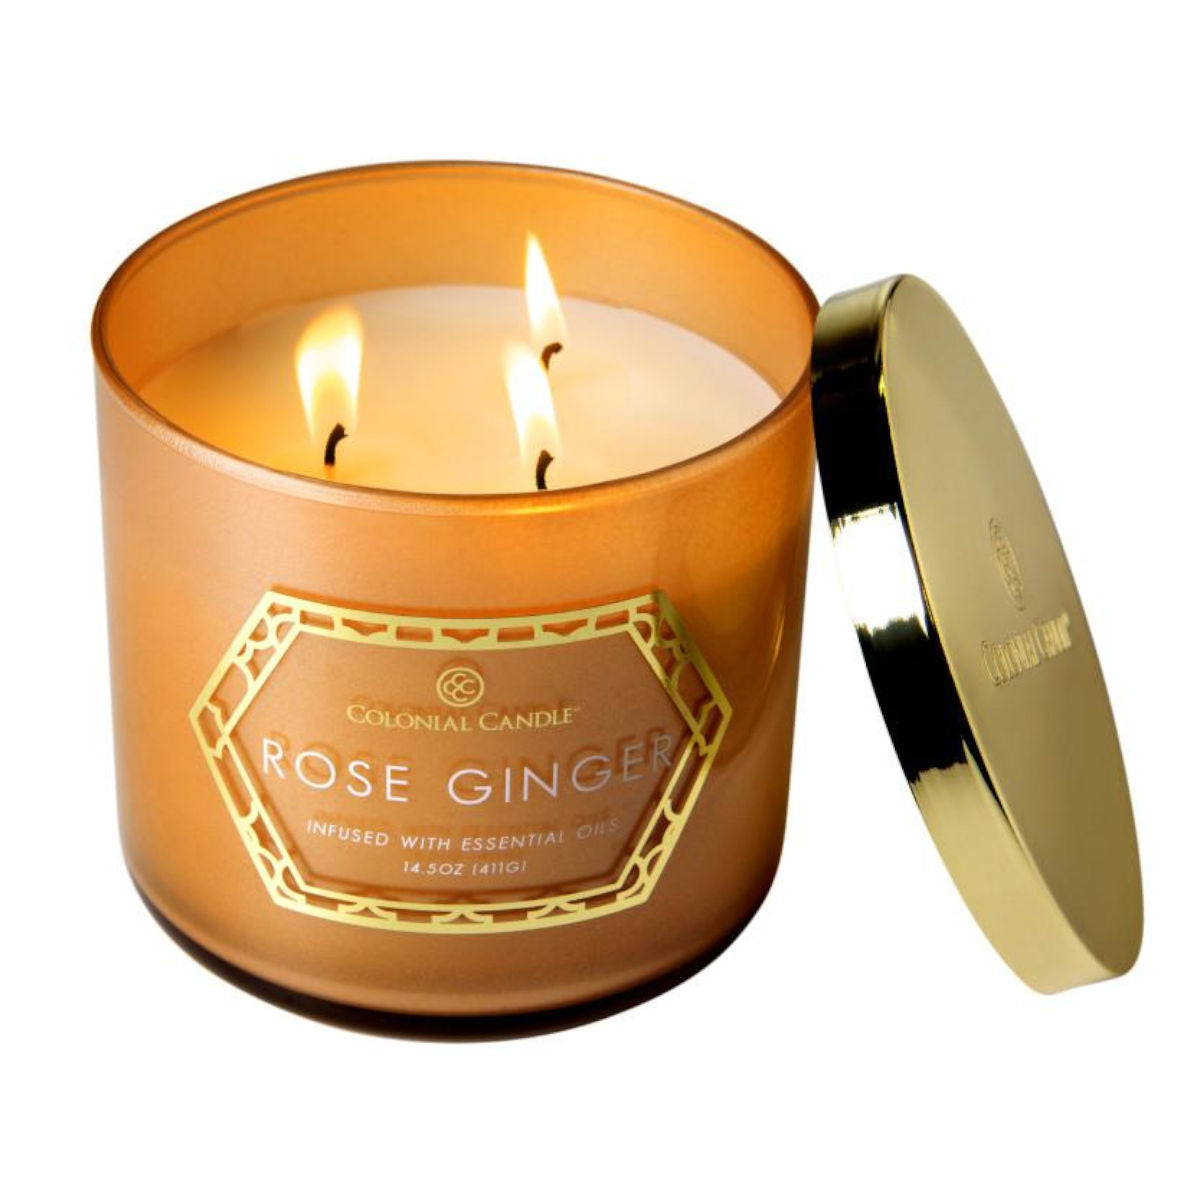 Colonial Candle - Geo Luxe Rose Ginger - sojablend geurkaars 411 gram - vooraanzicht met gouden deksel , geuren van roos, citroen, cyclaam en kersenbloesem - brandende kaars met drie lonten en gouden deksel